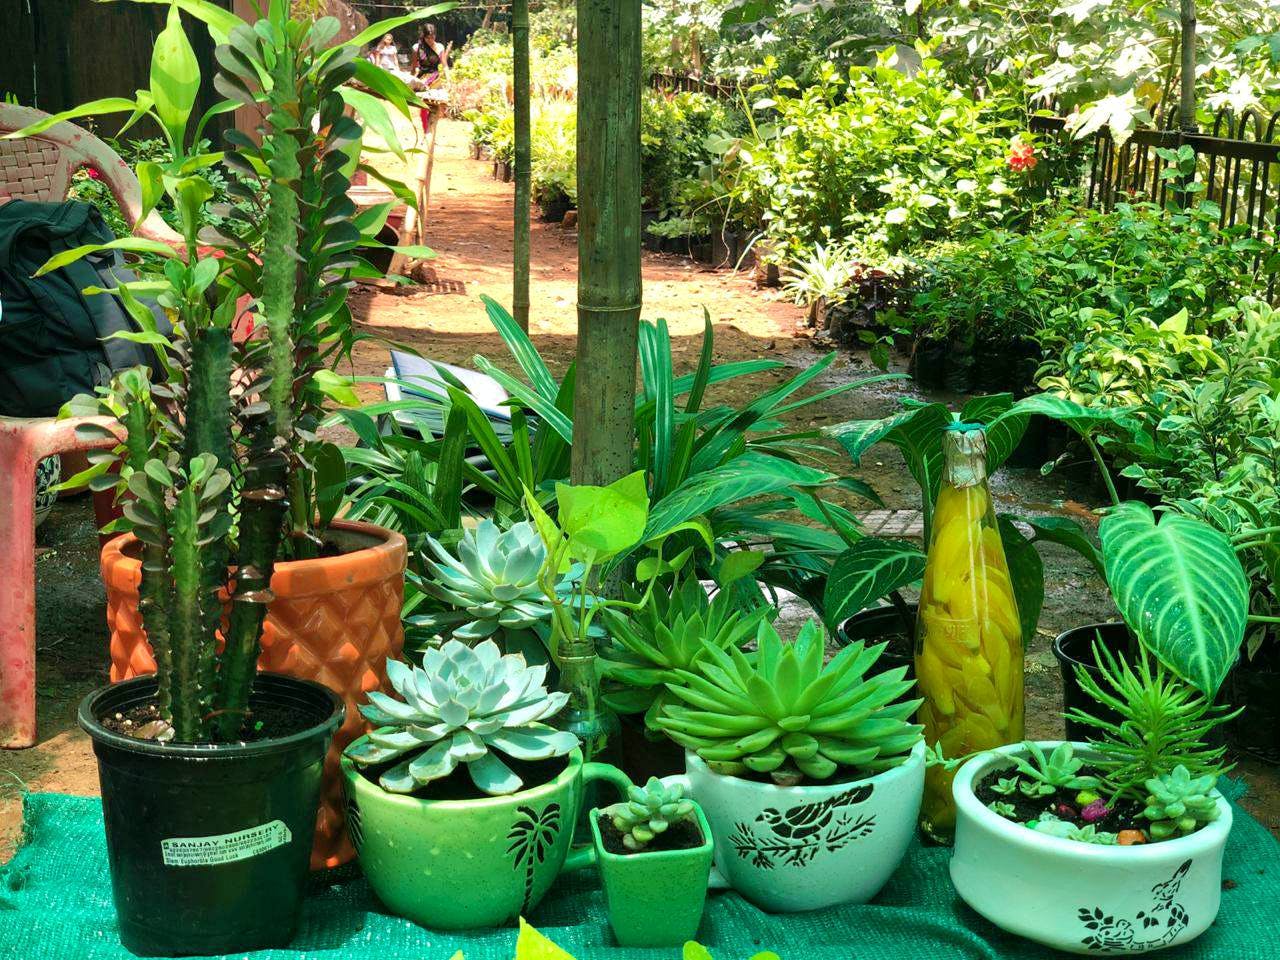 Plant,Flowerpot,Houseplant,Flower,Terrestrial plant,Botany,Garden,Vascular plant,Herb,Plant community